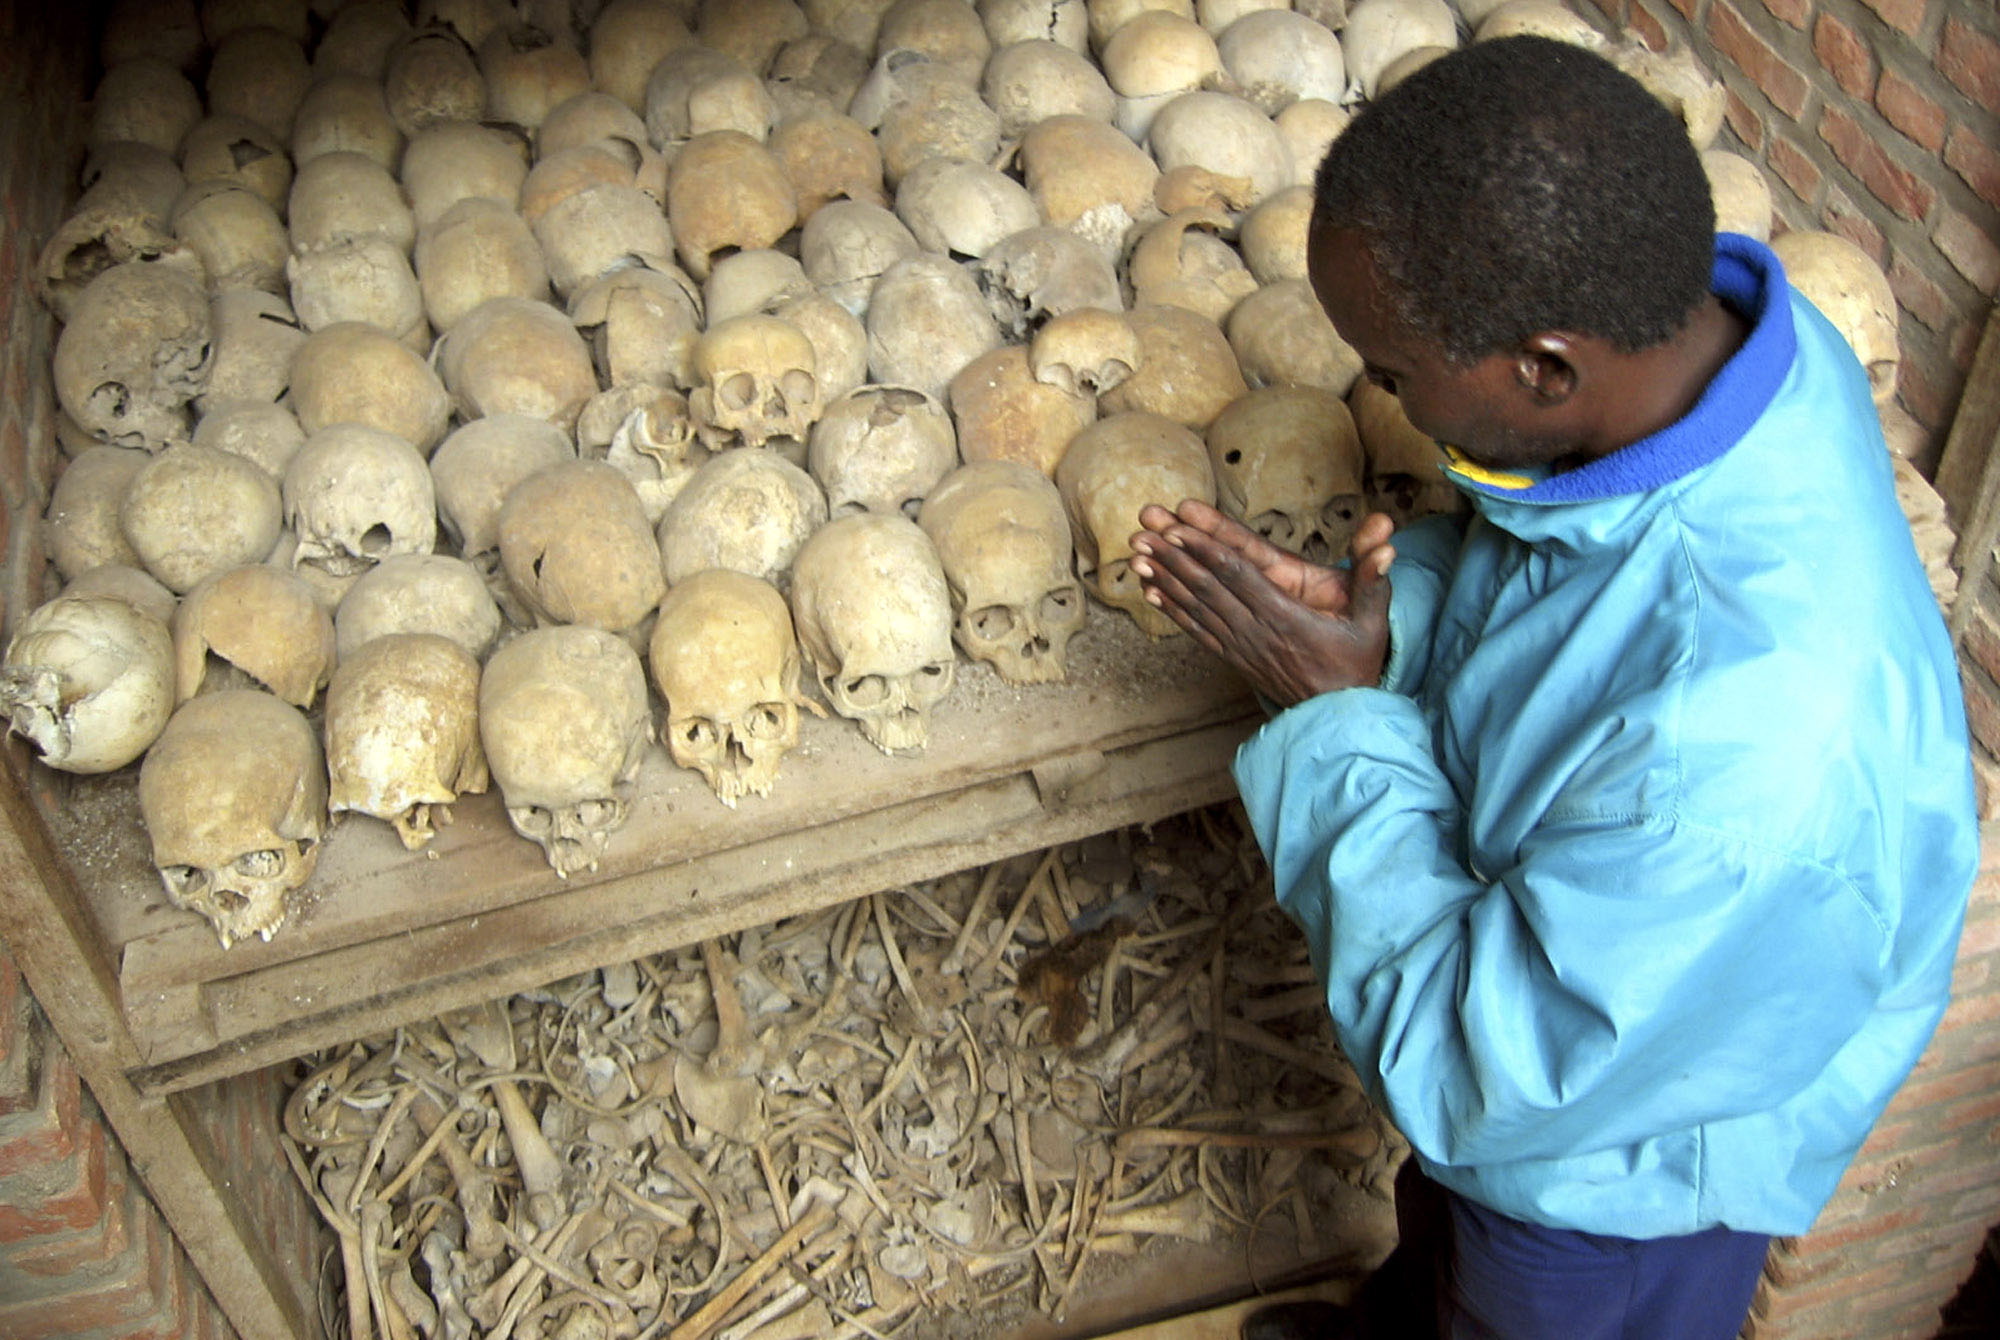 Folkmord, Afrika, Rwanda, FN, Etnisk rensning